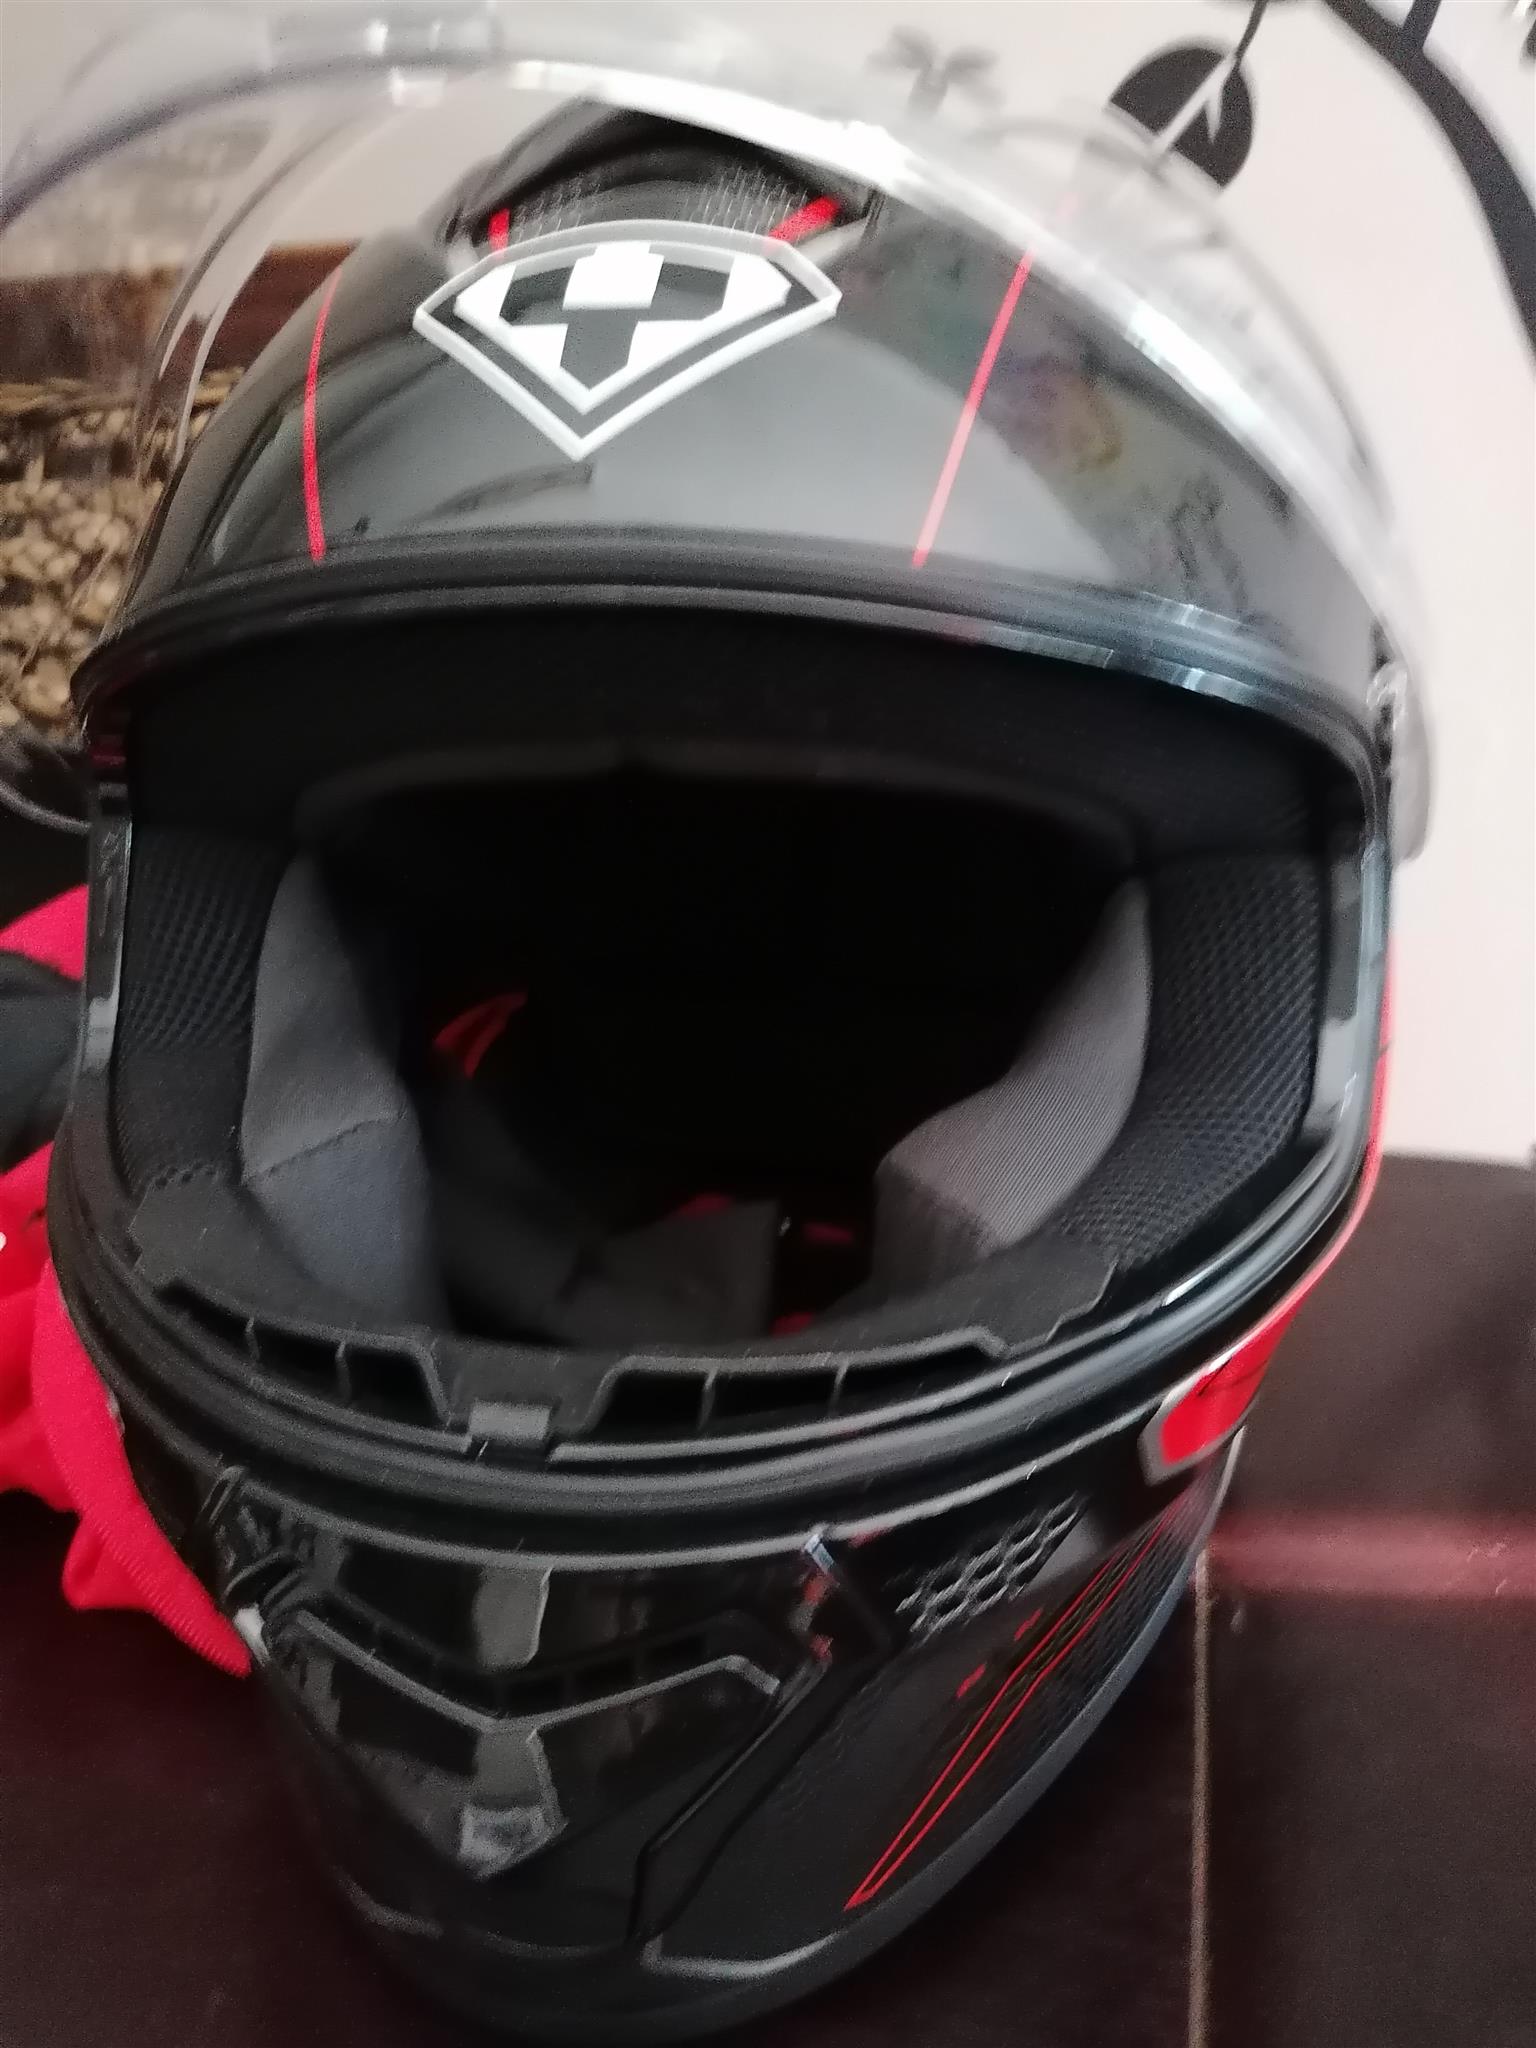 Red bike helmet - Size Small